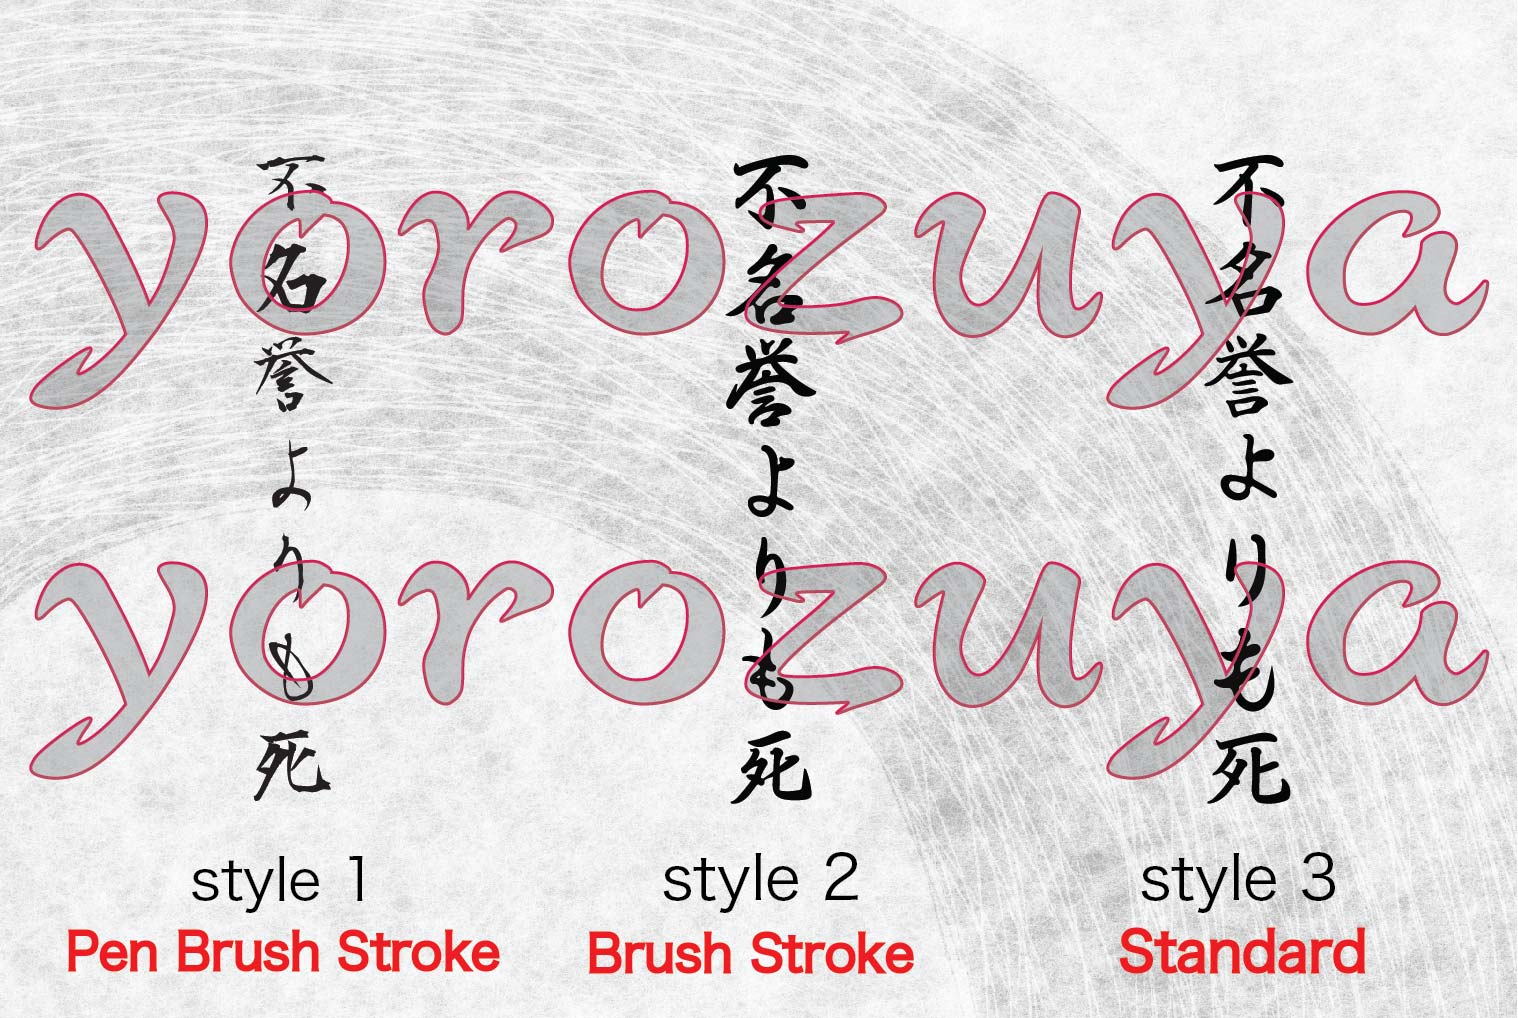 Death Before Dishonour In Japanese Symbols For Tattoo – Yorozuya